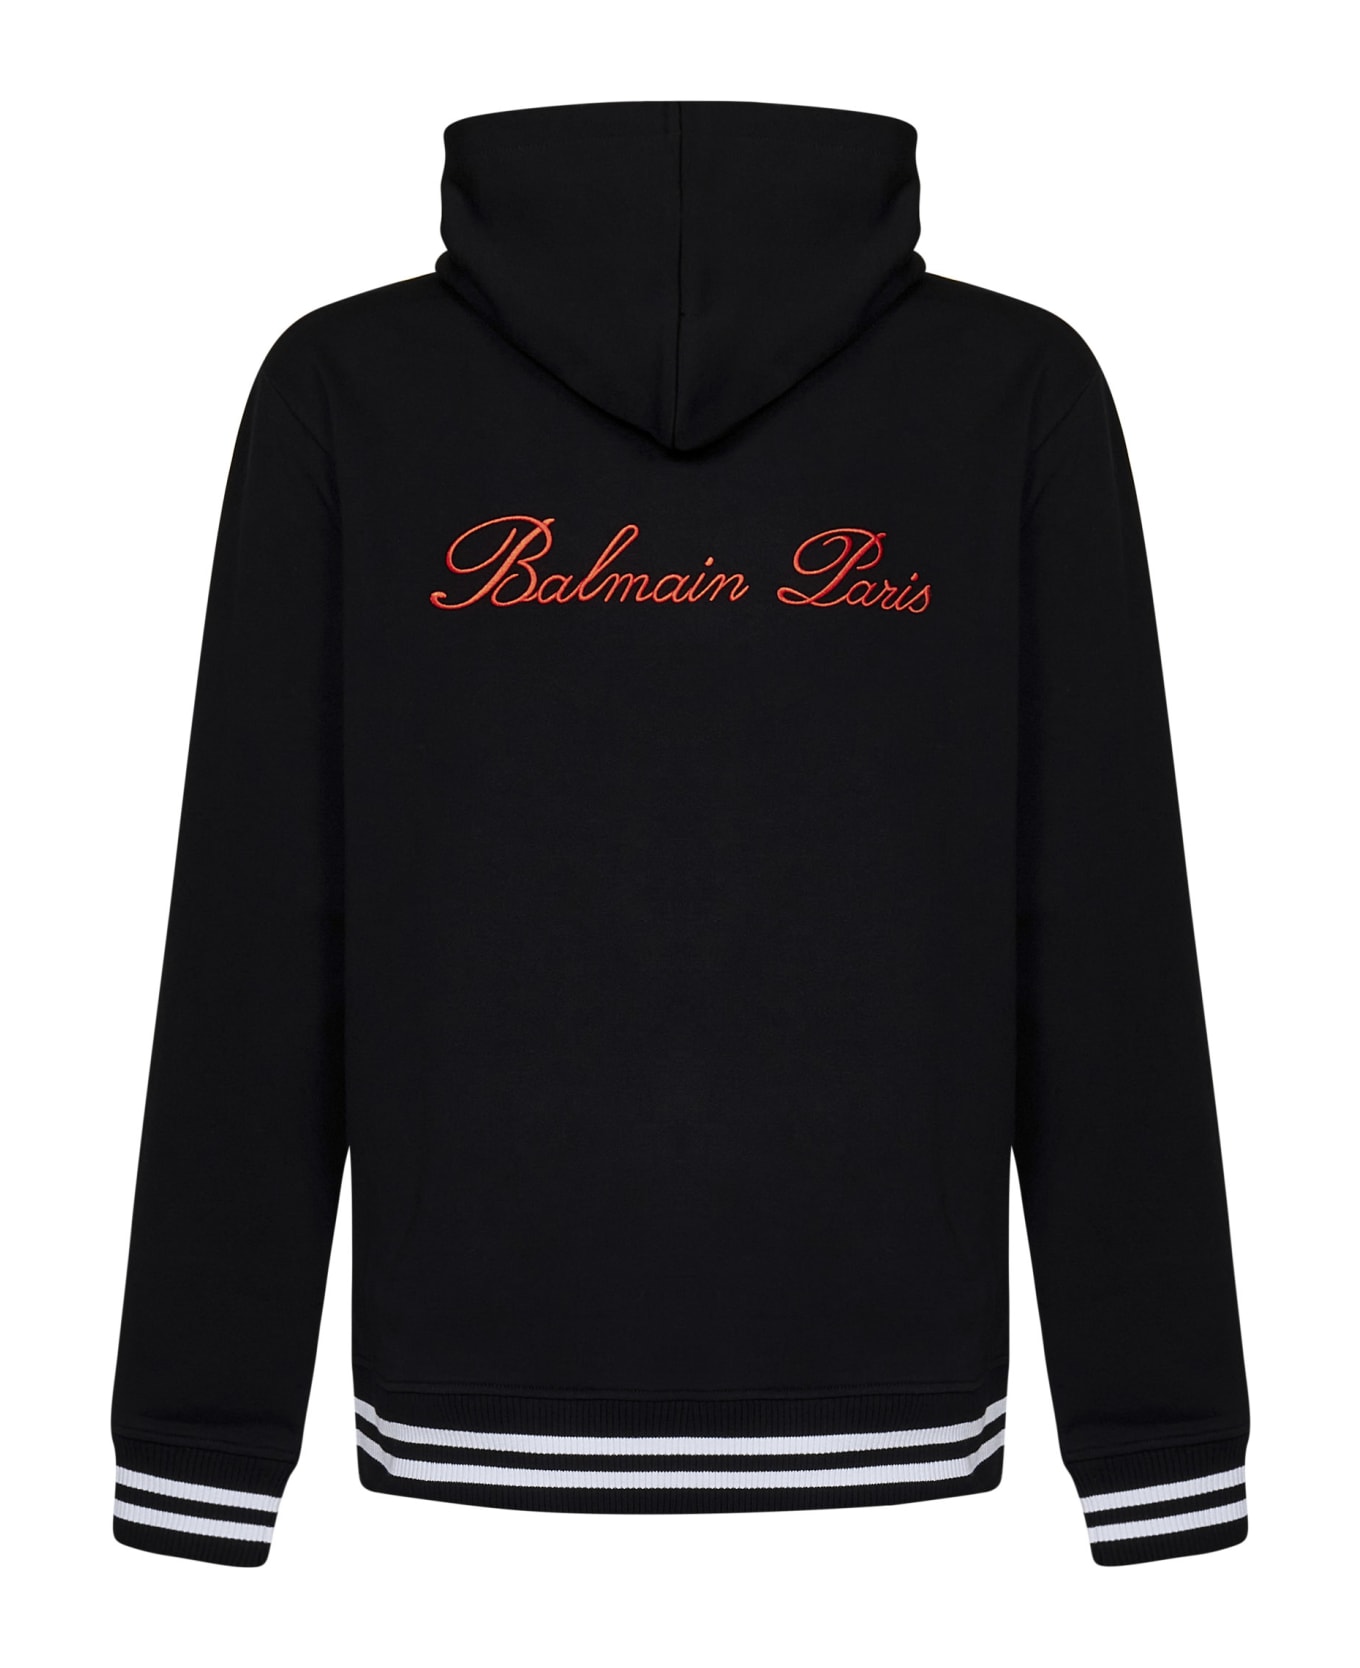 Balmain Paris  Signature Sweatshirt - Black